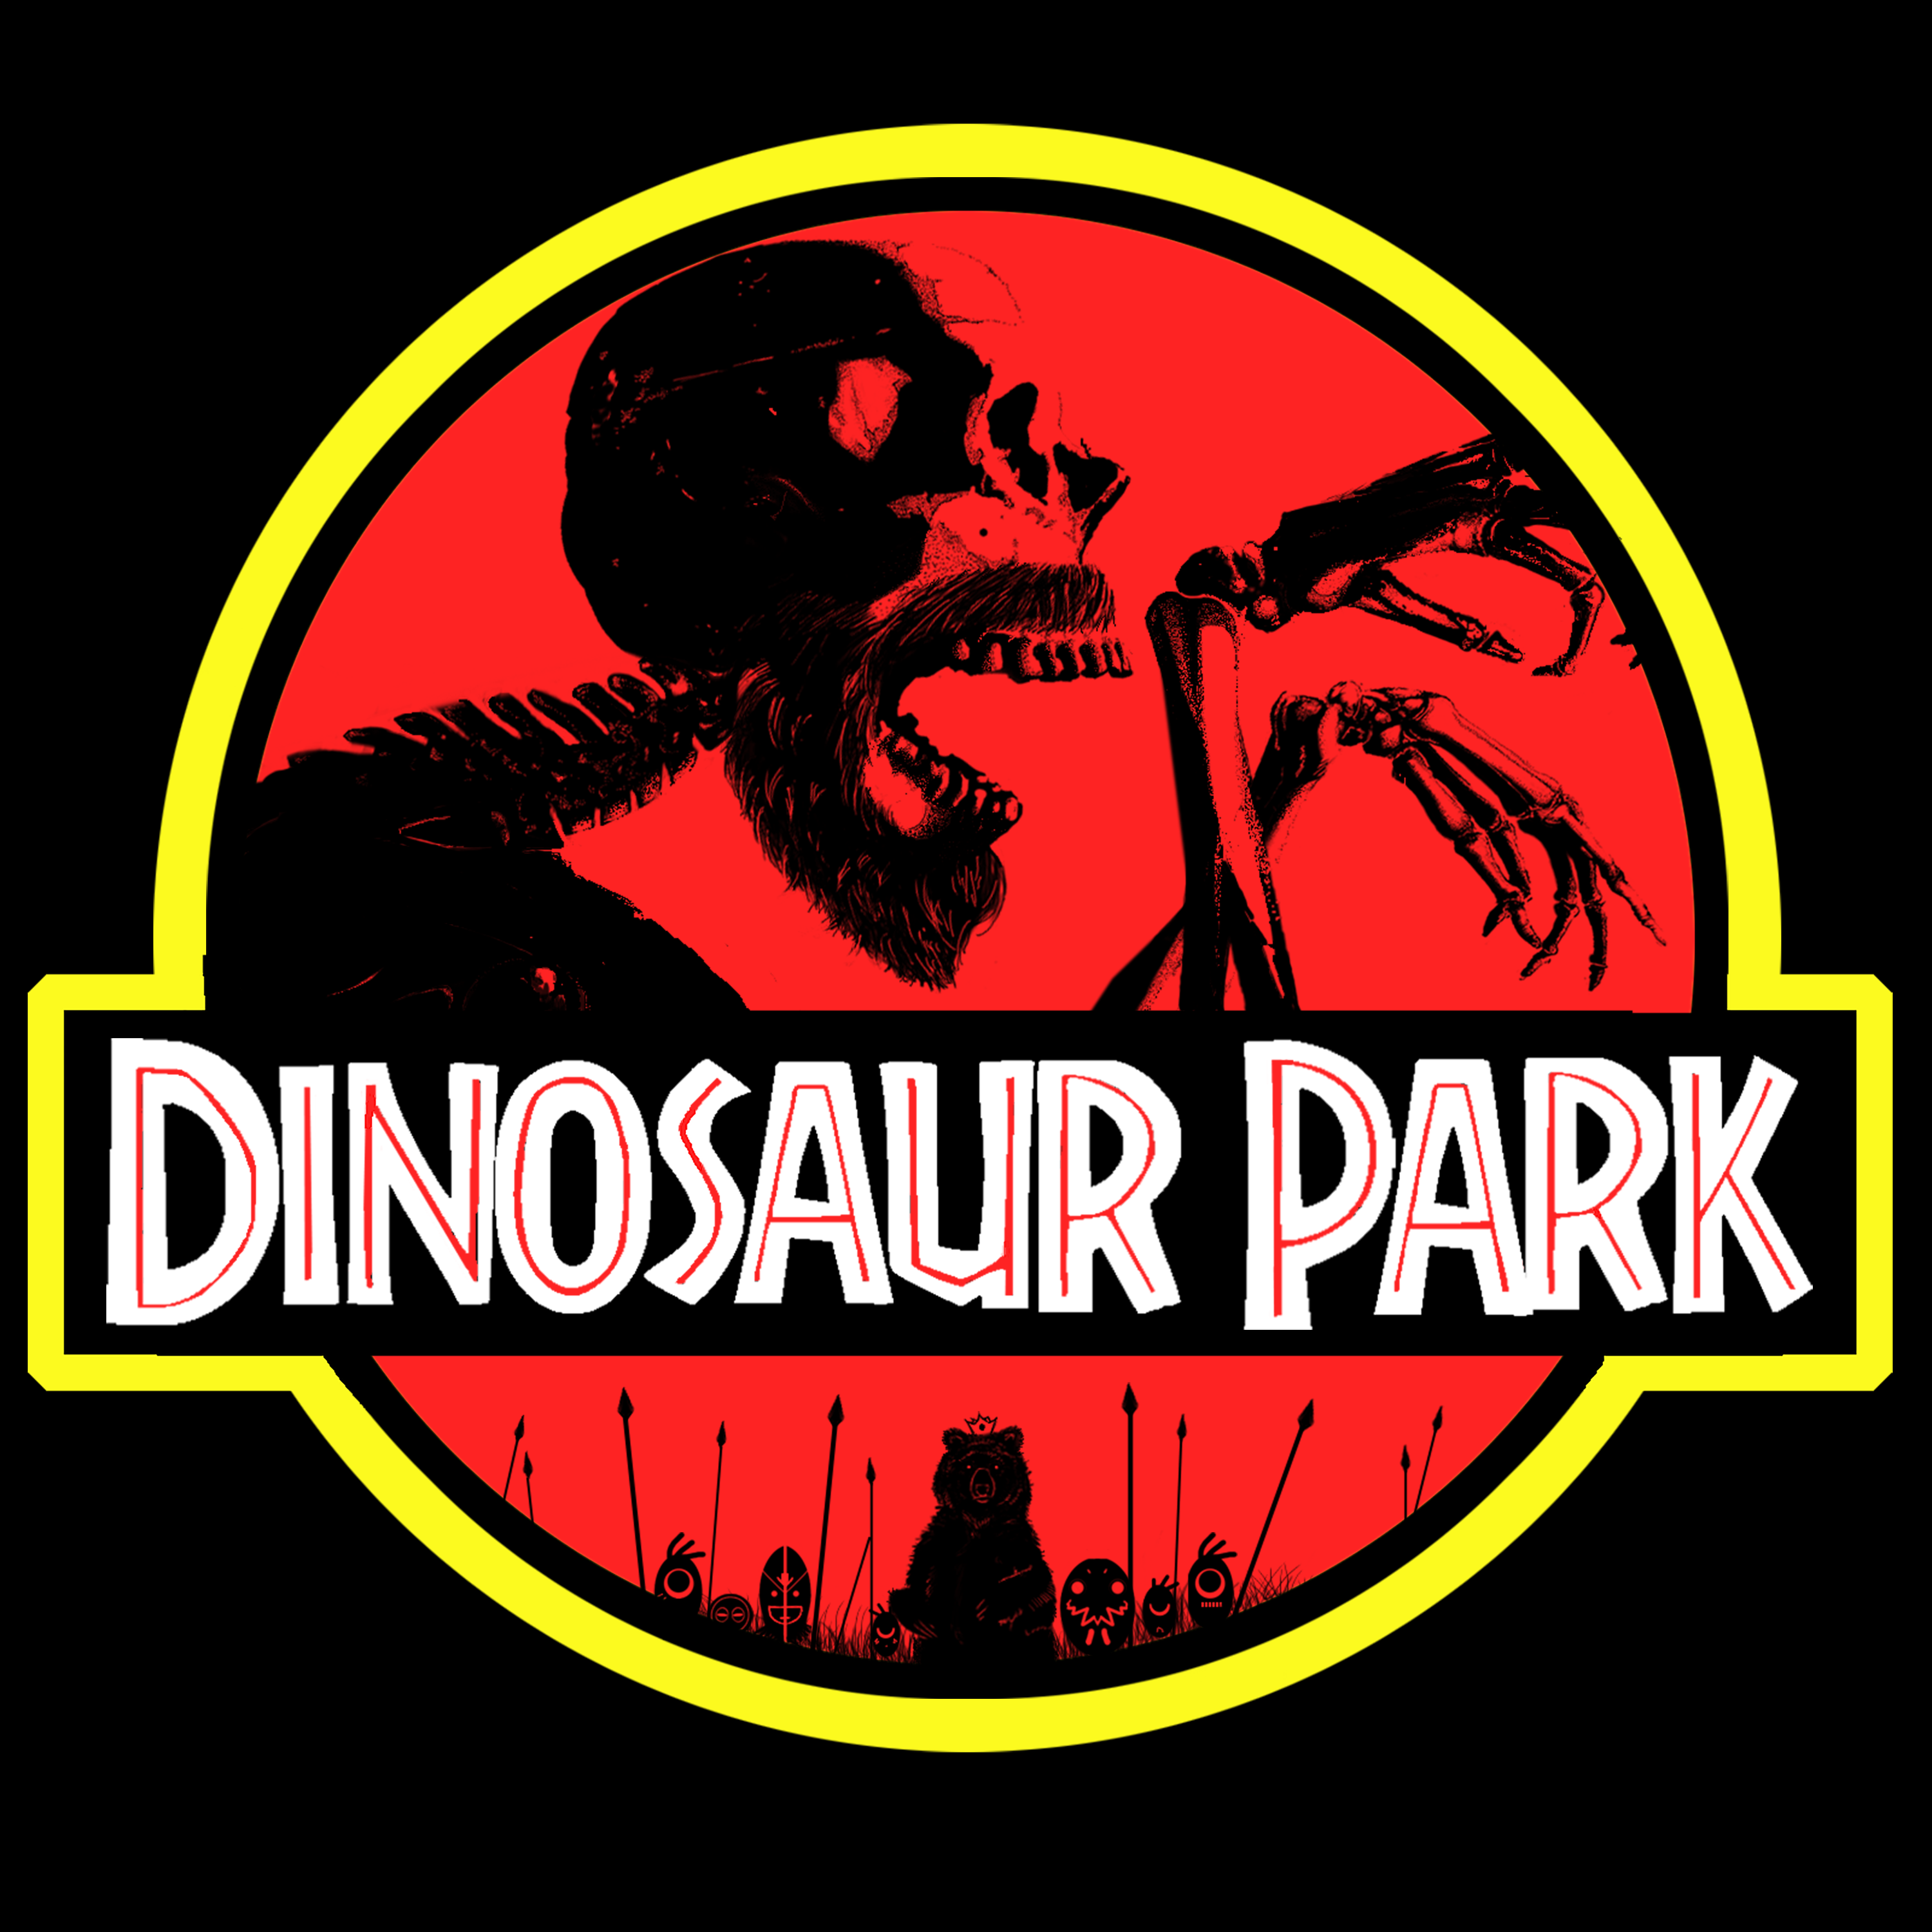 Dinosaur Park #7 Lunch ’n’ Snack